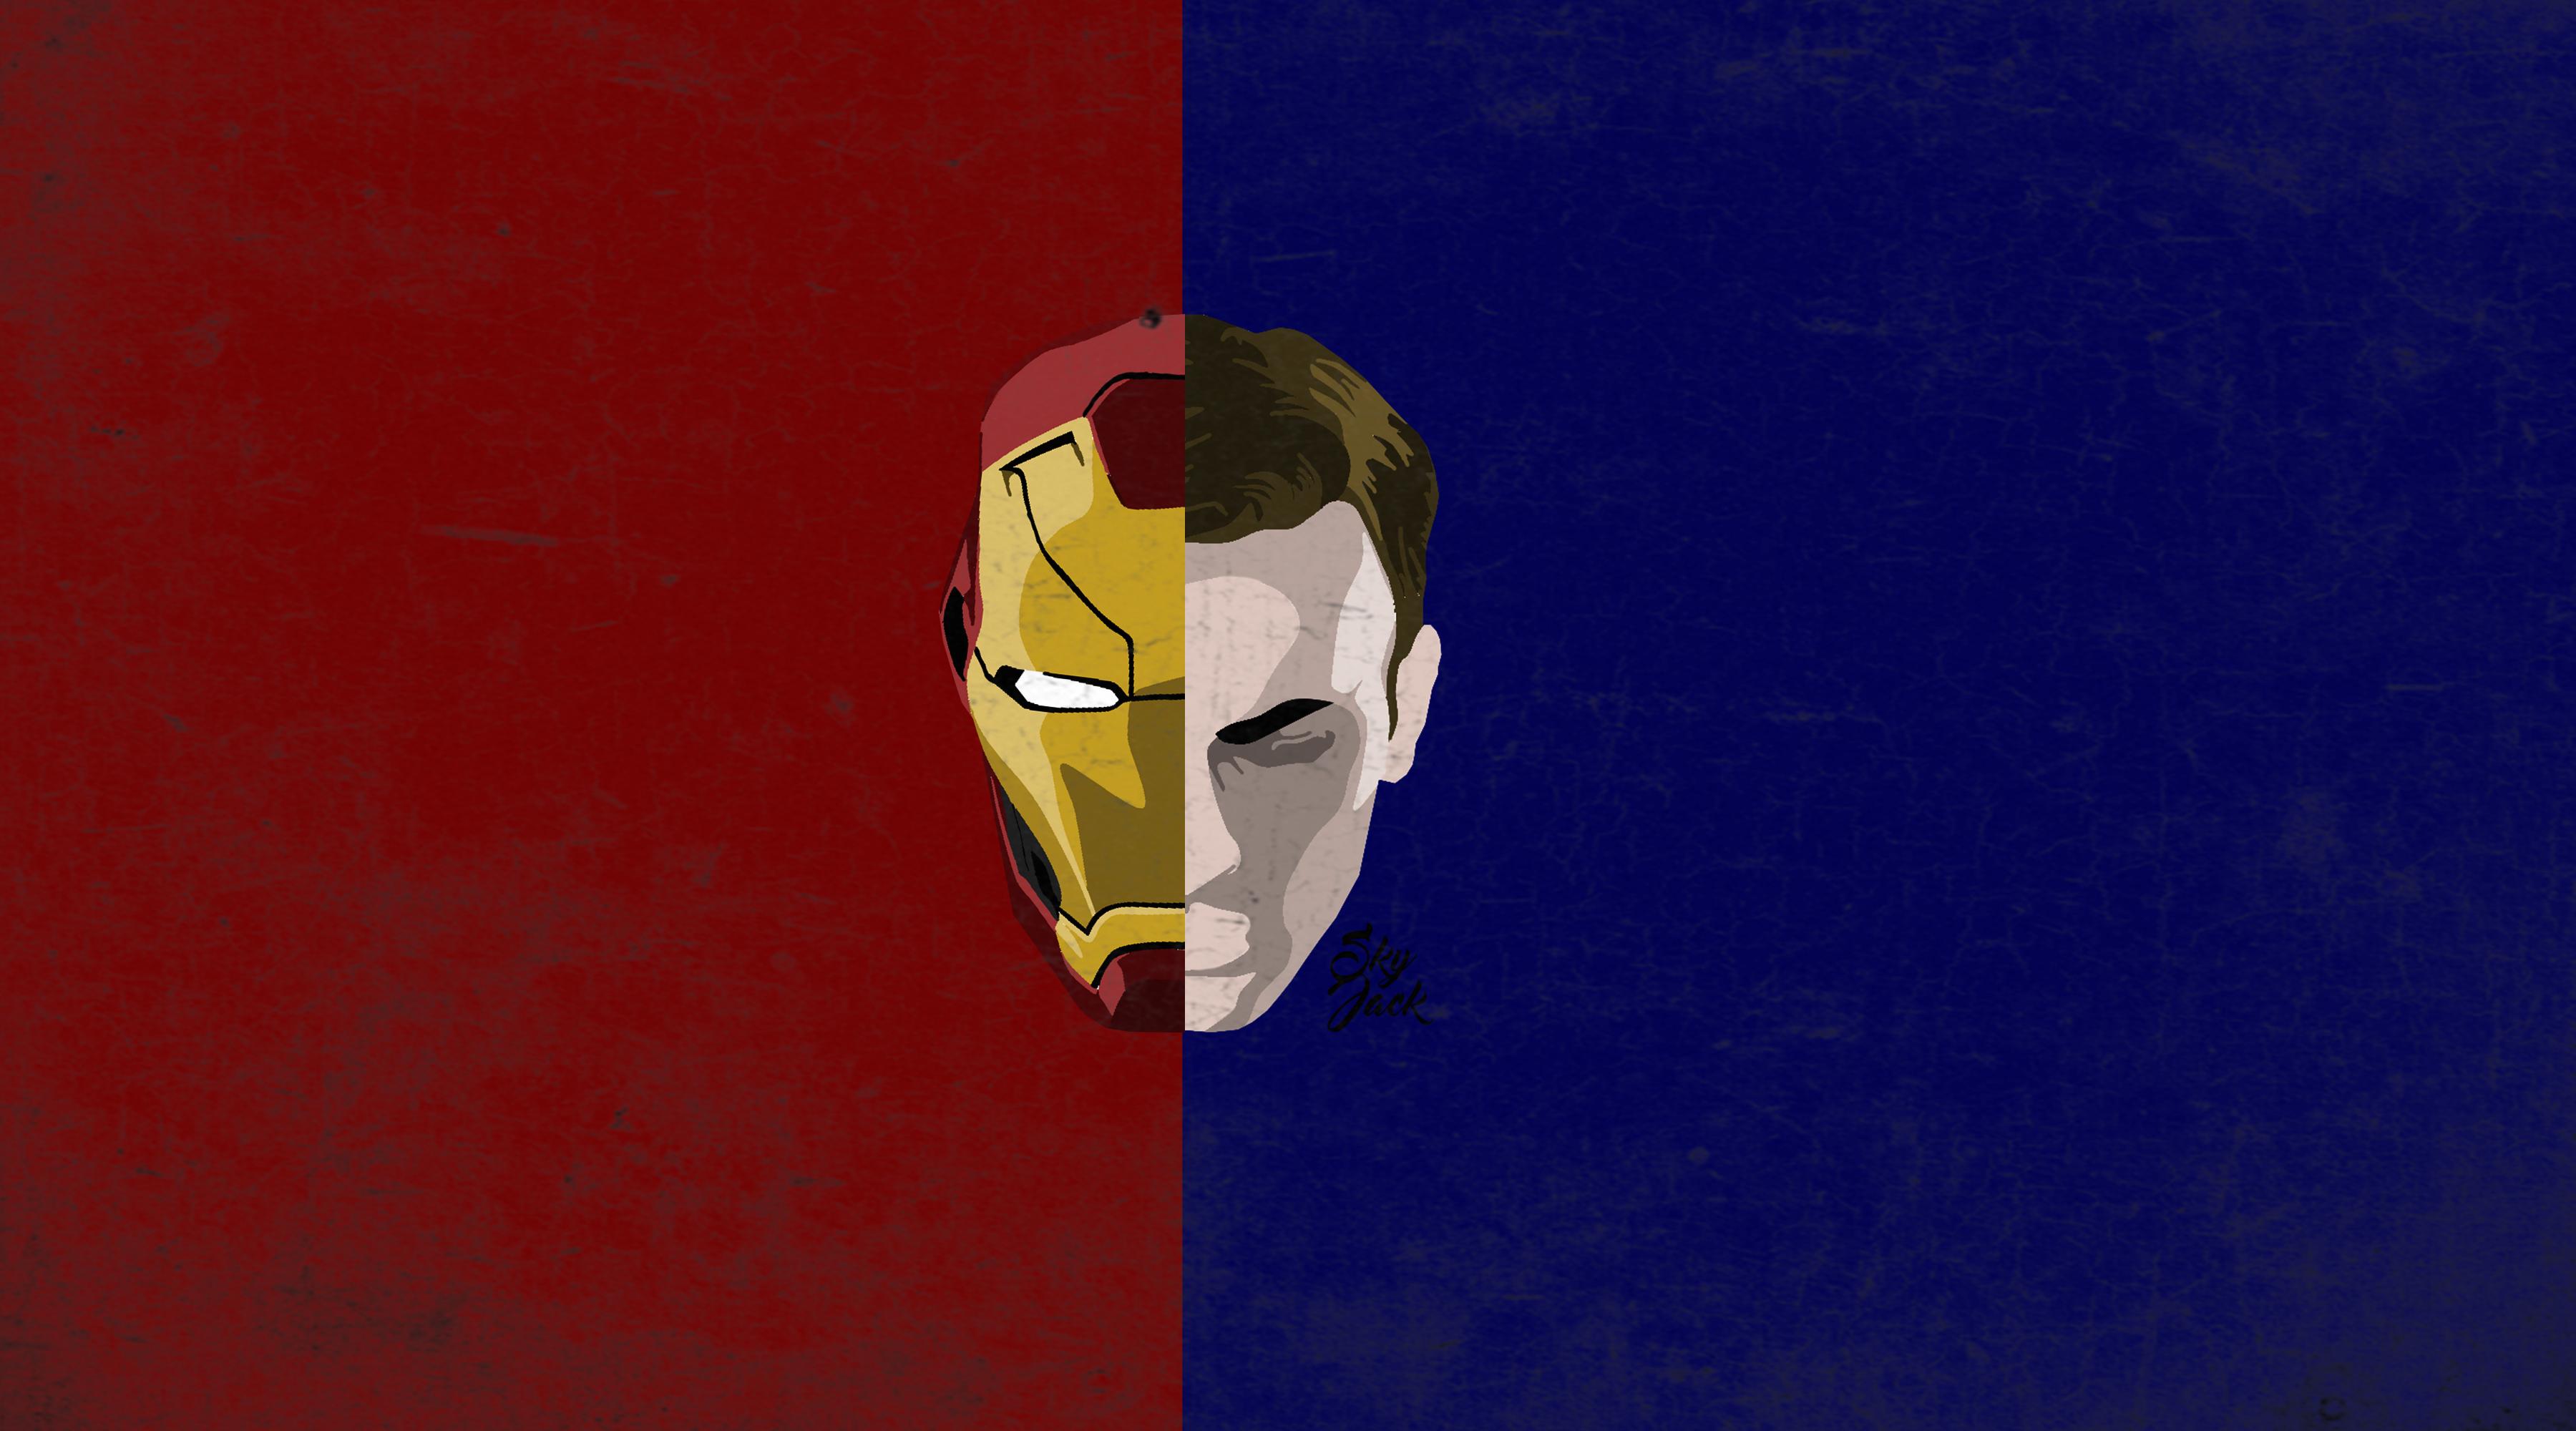 Iron Man - HD Wallpaper 